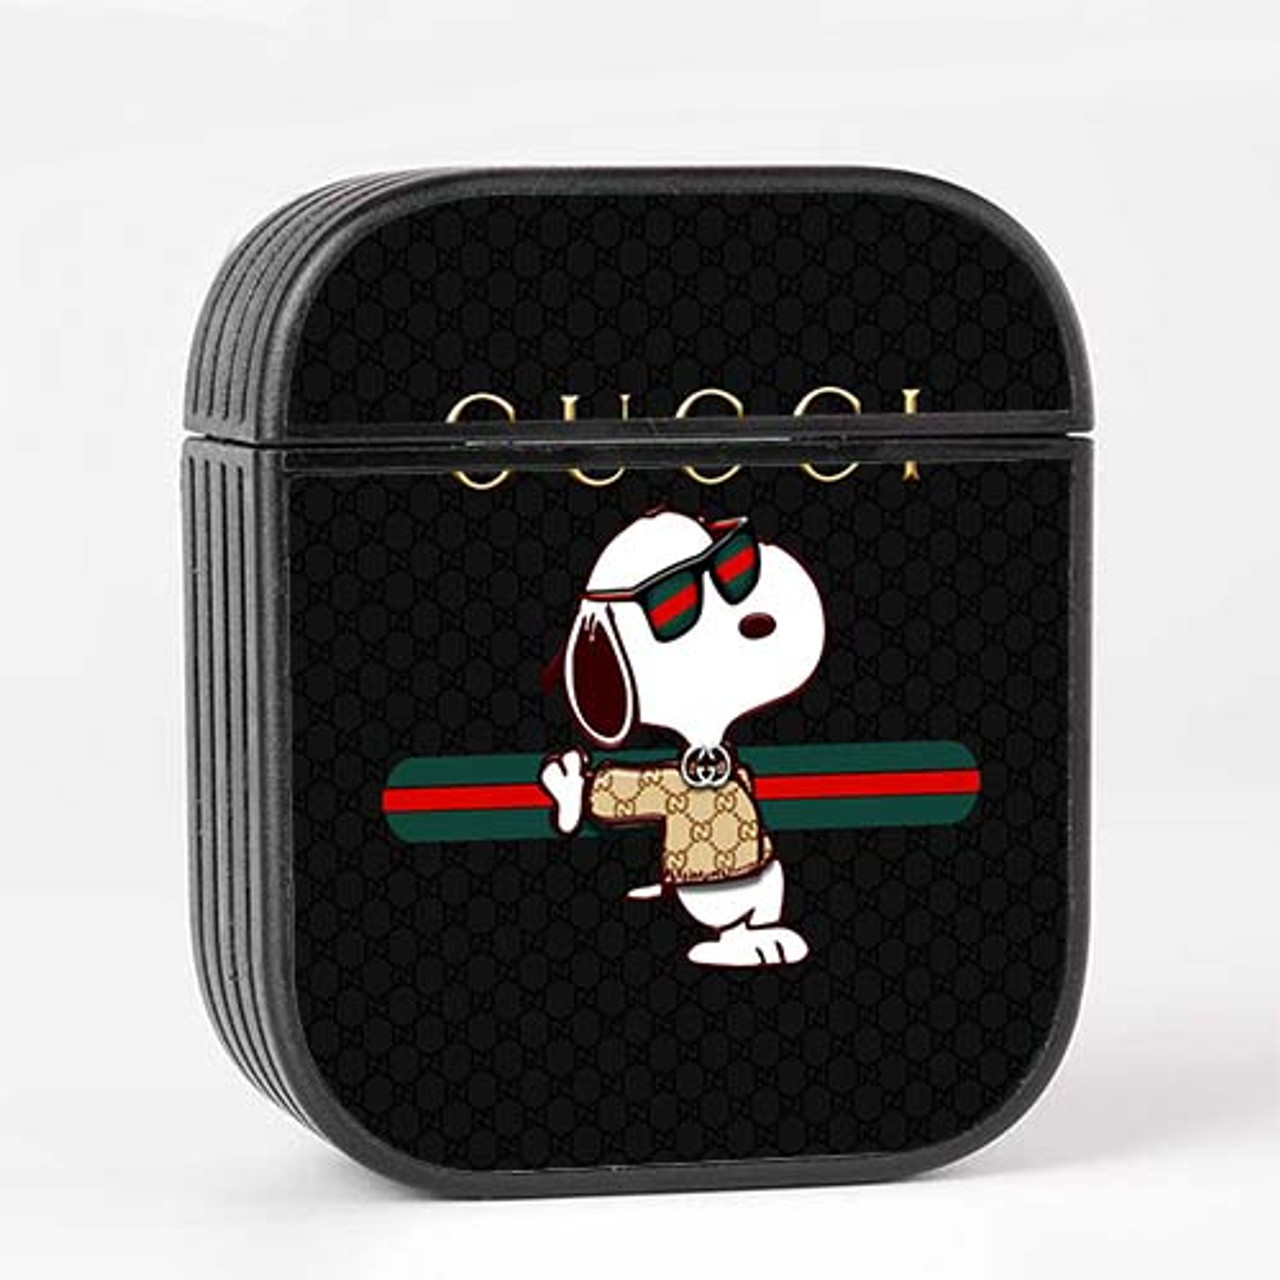 gucci case for airpods pro Gucci Airpod 3 Case Protective Case